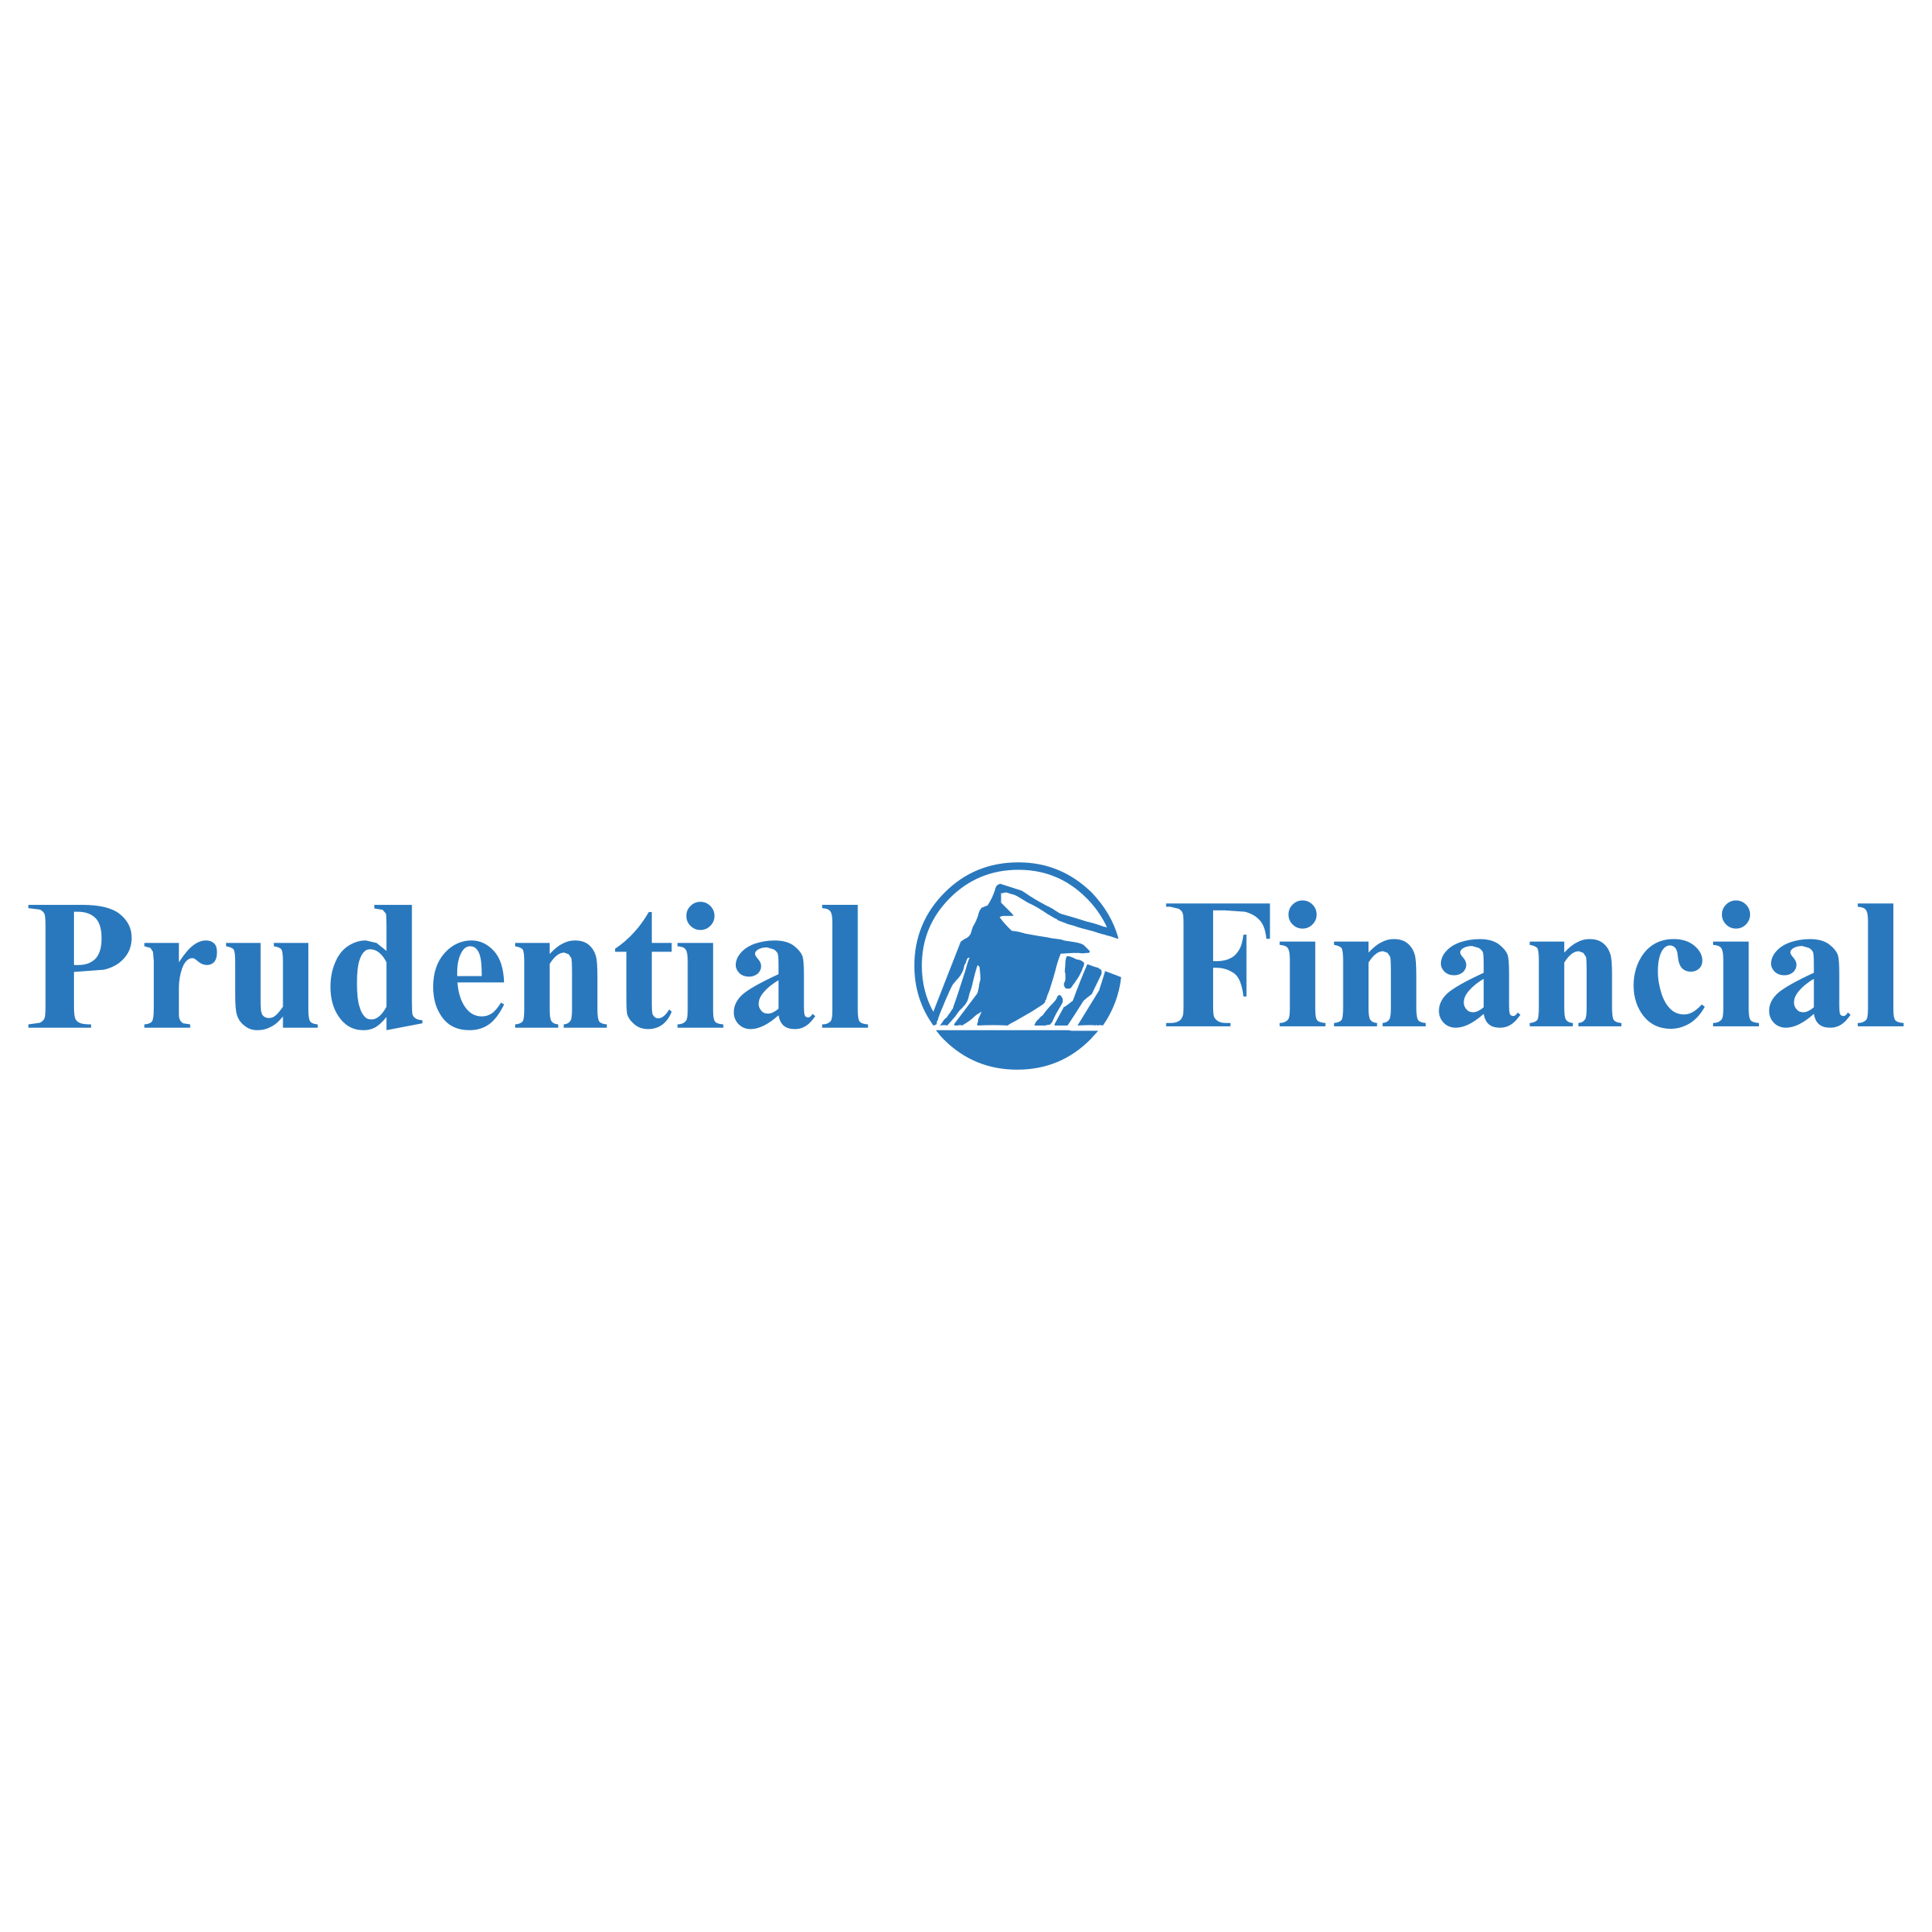 prudential-financial-logo-png-transparent.png